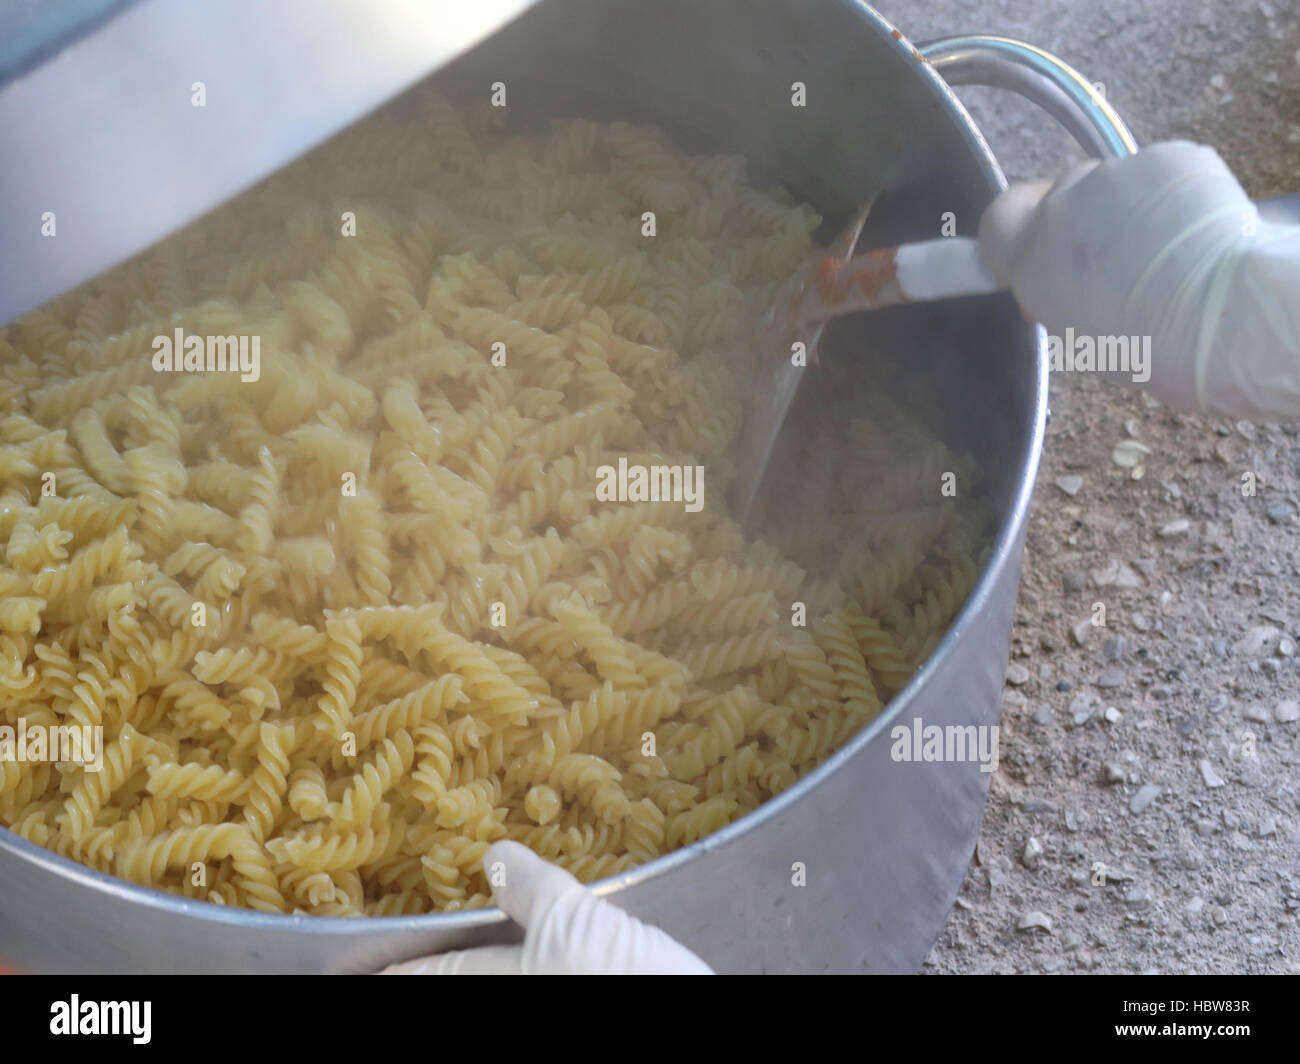 Big pan hi-res stock photography and images - Alamy